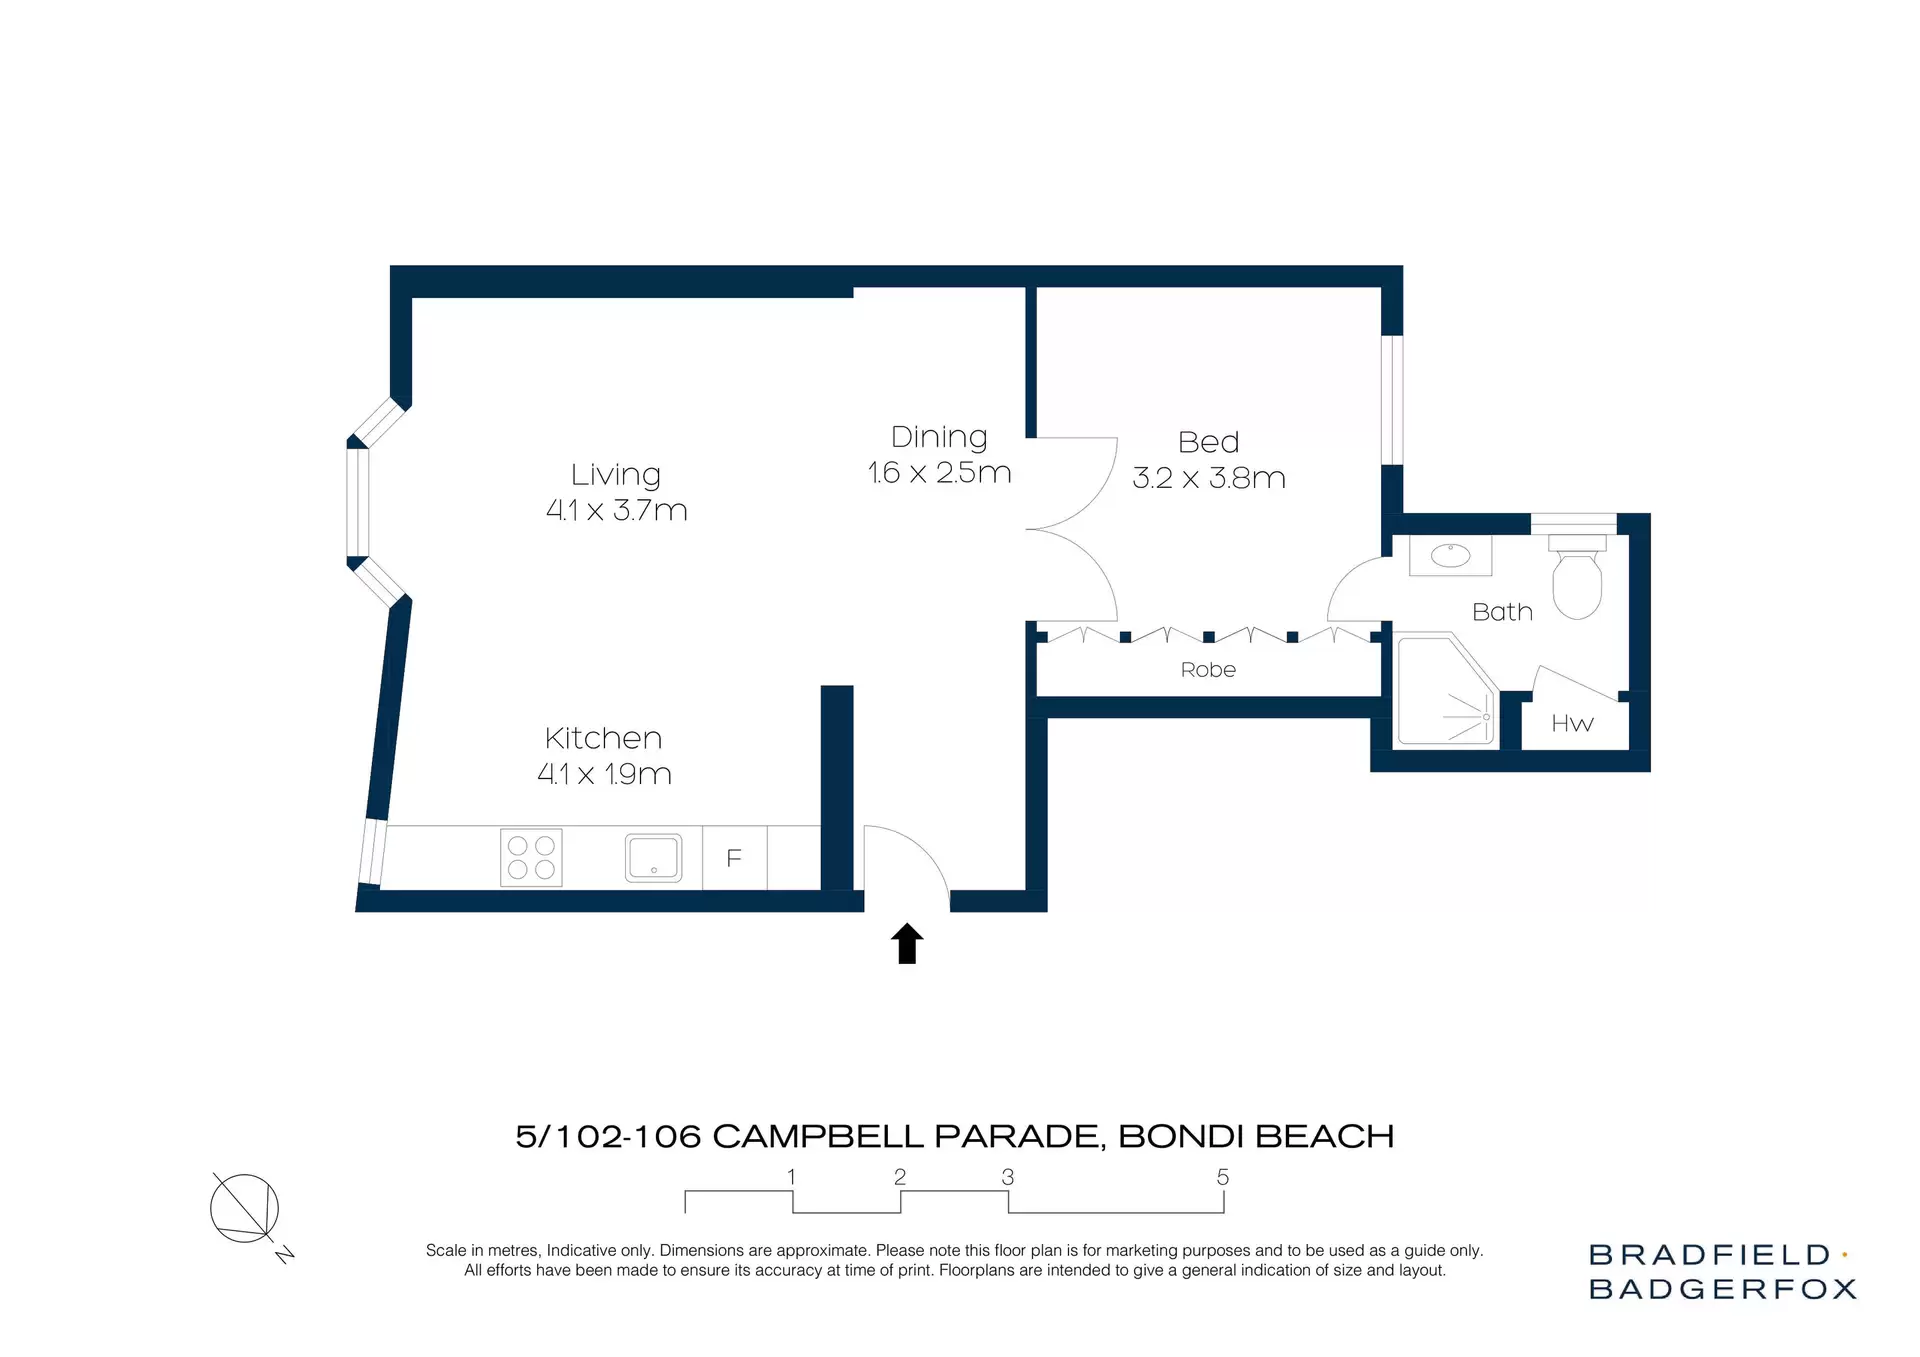 5/102-106 Campbell Parade, Bondi Beach For Sale by Bradfield Badgerfox - image 1